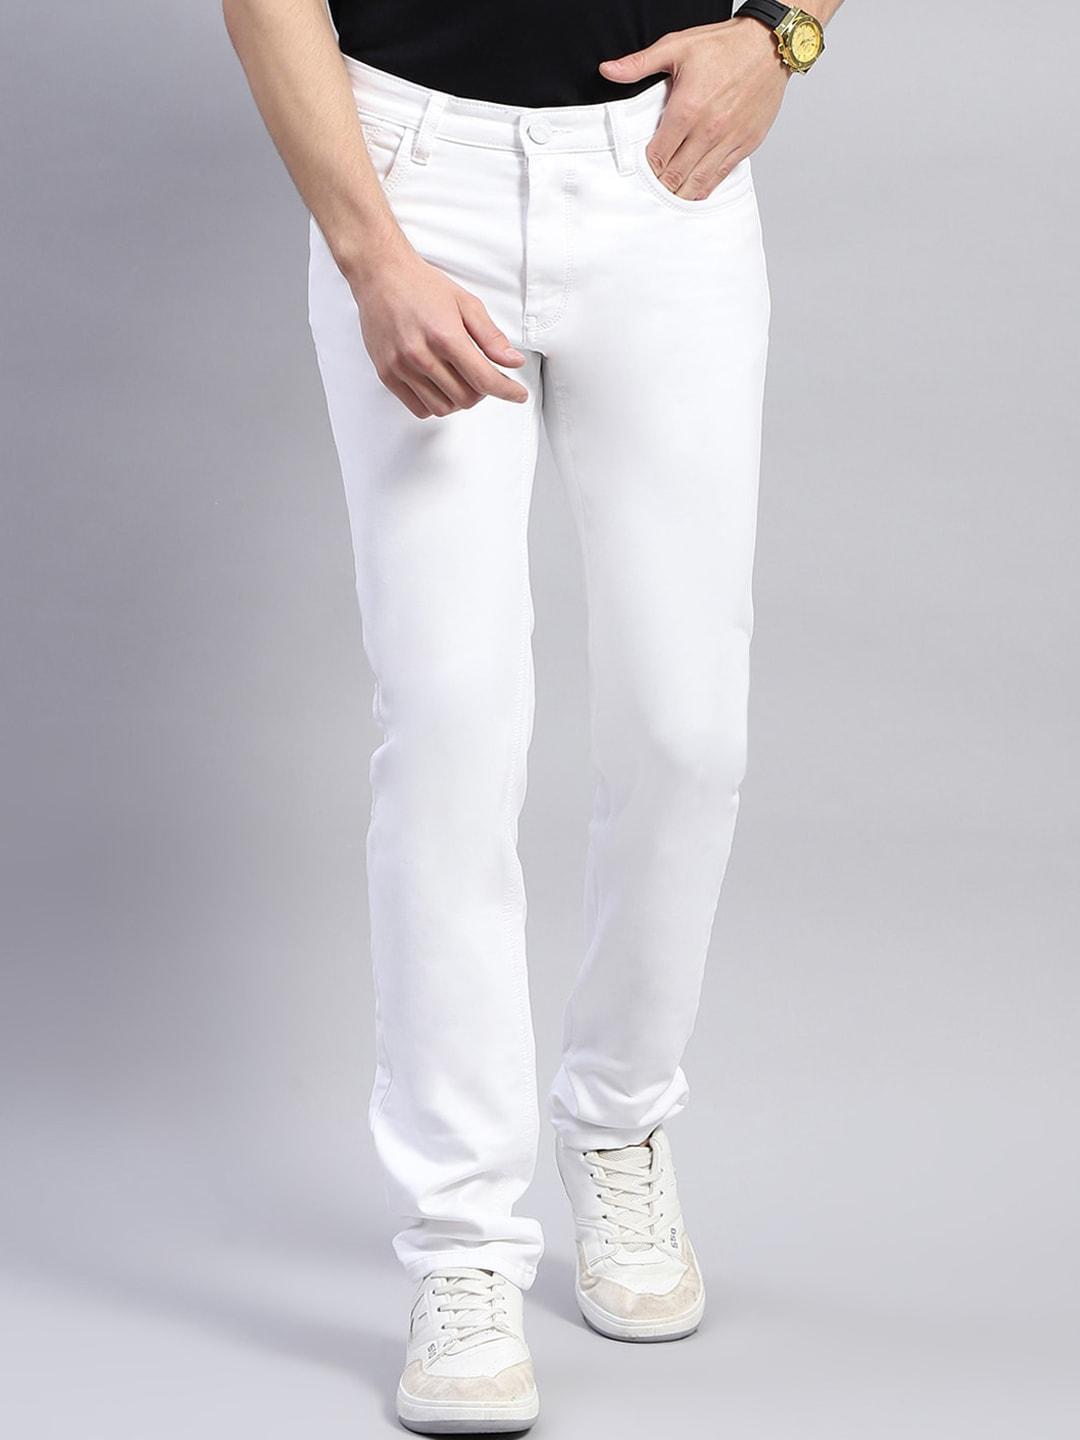 monte-carlo-men-narrow-slim-fit-stretchable-jeans